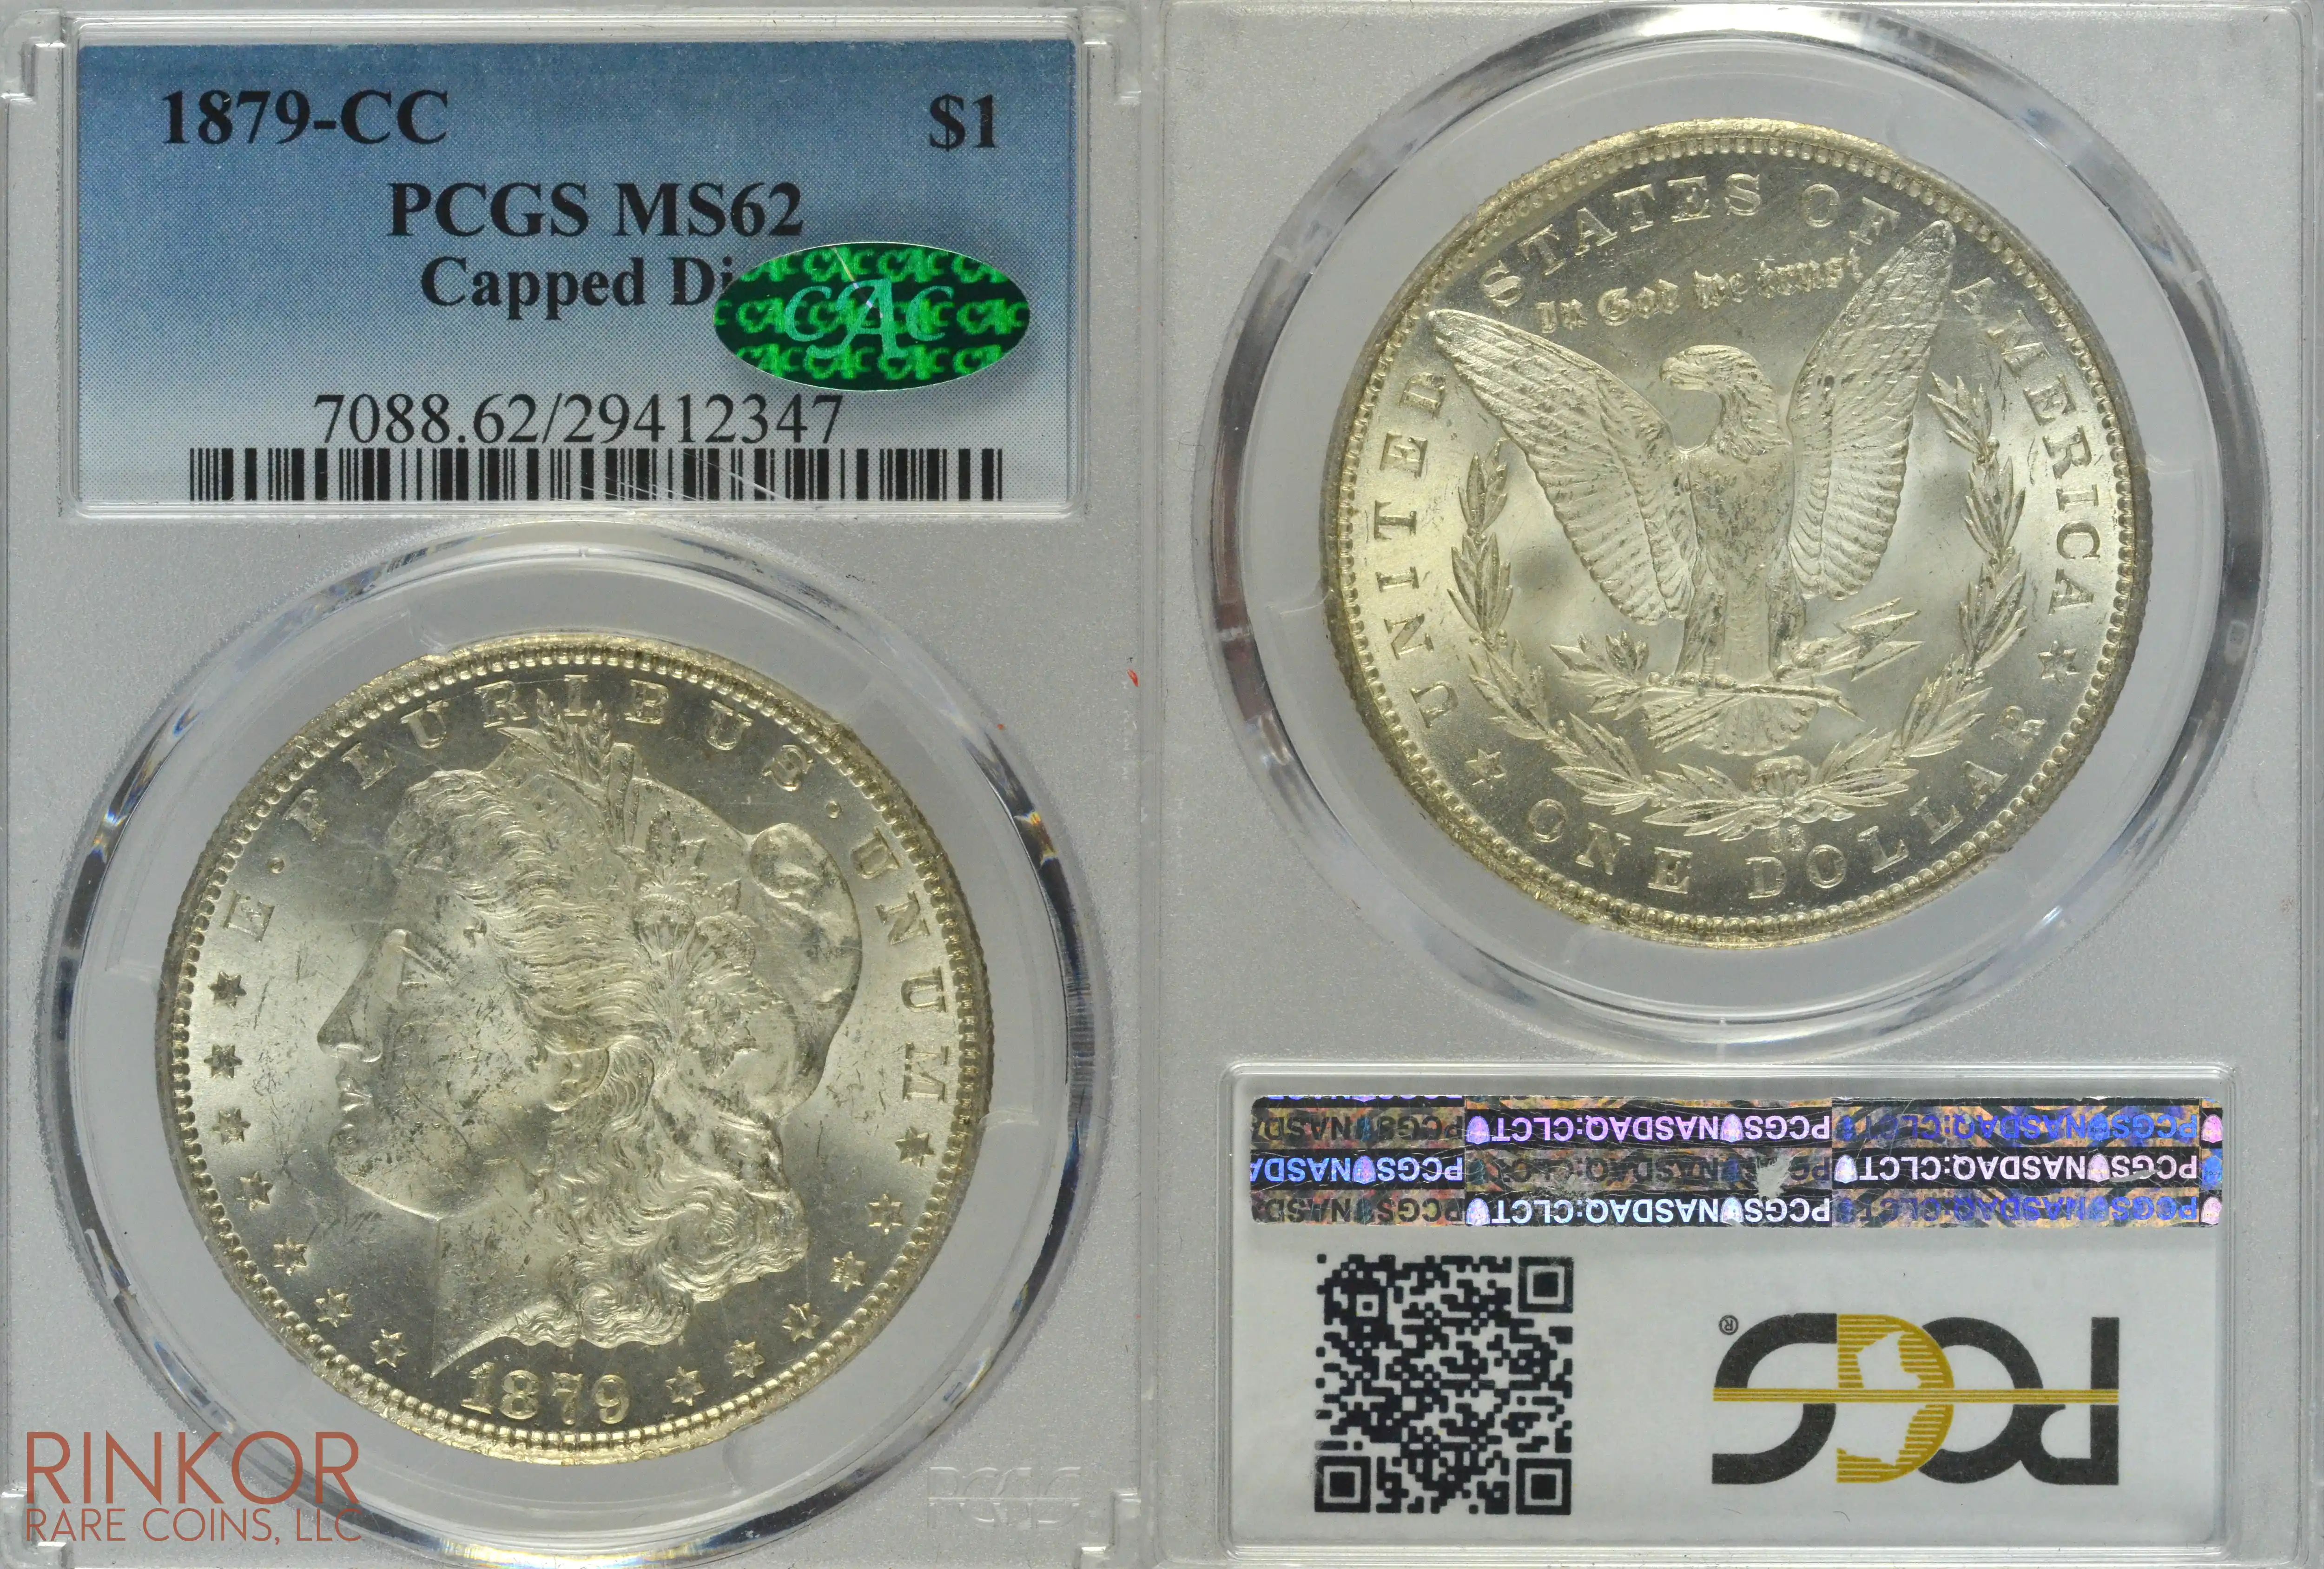 1879-CC $1 Capped Die PCGS MS 62 CAC